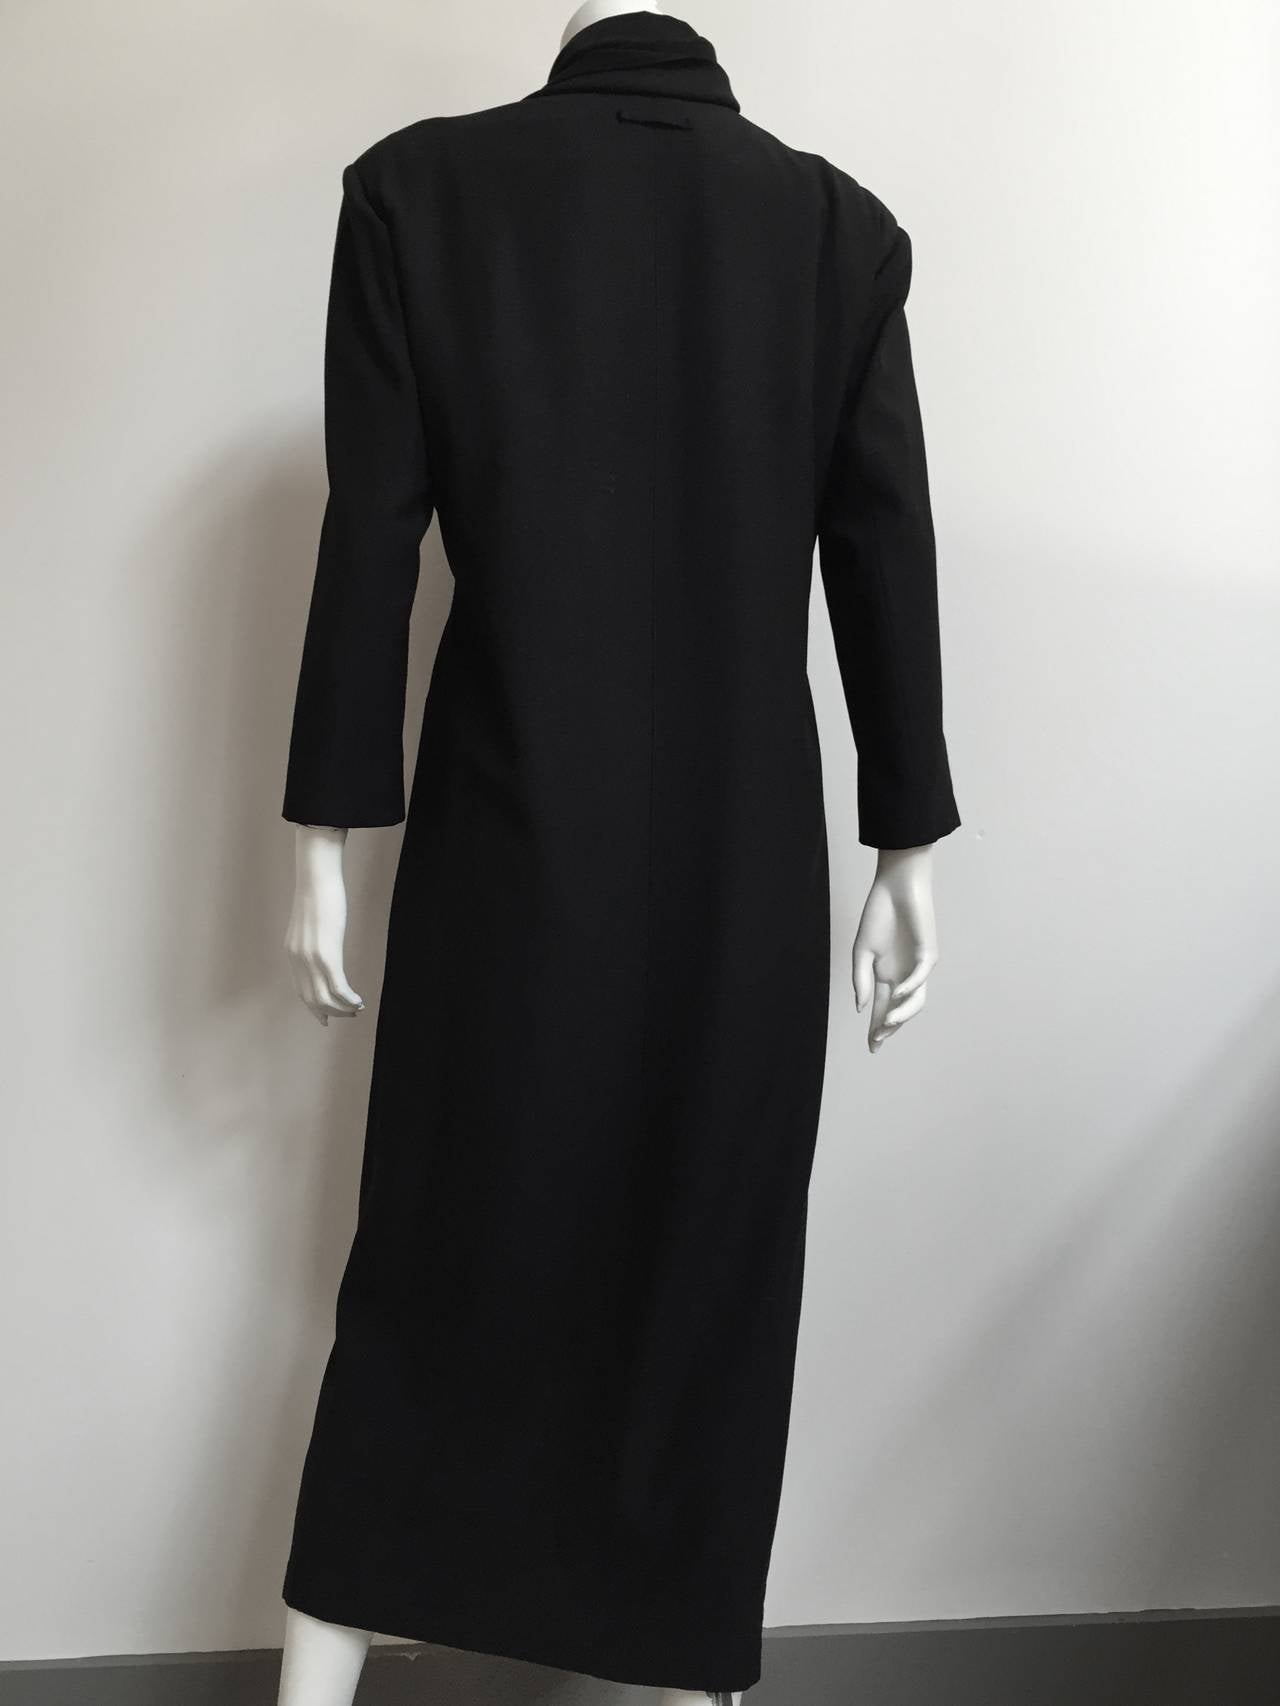 Jean Paul Gaultier 80s black wool coat size medium. 3